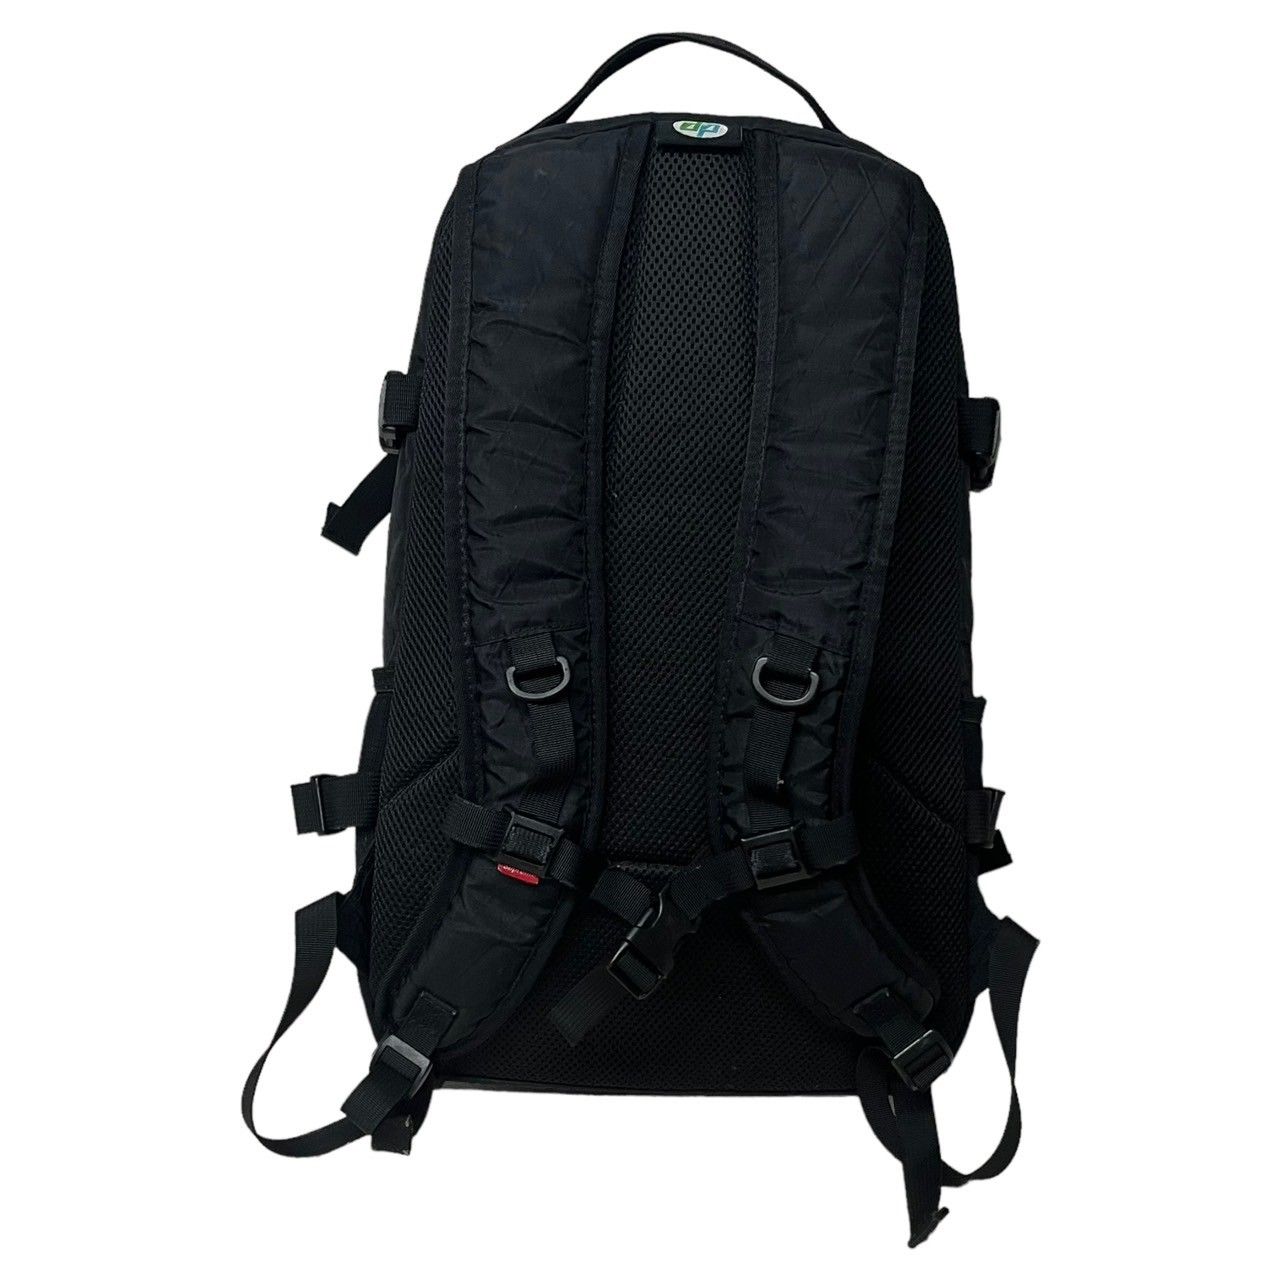 SUPREME(シュプリーム) 18FW Backpack 